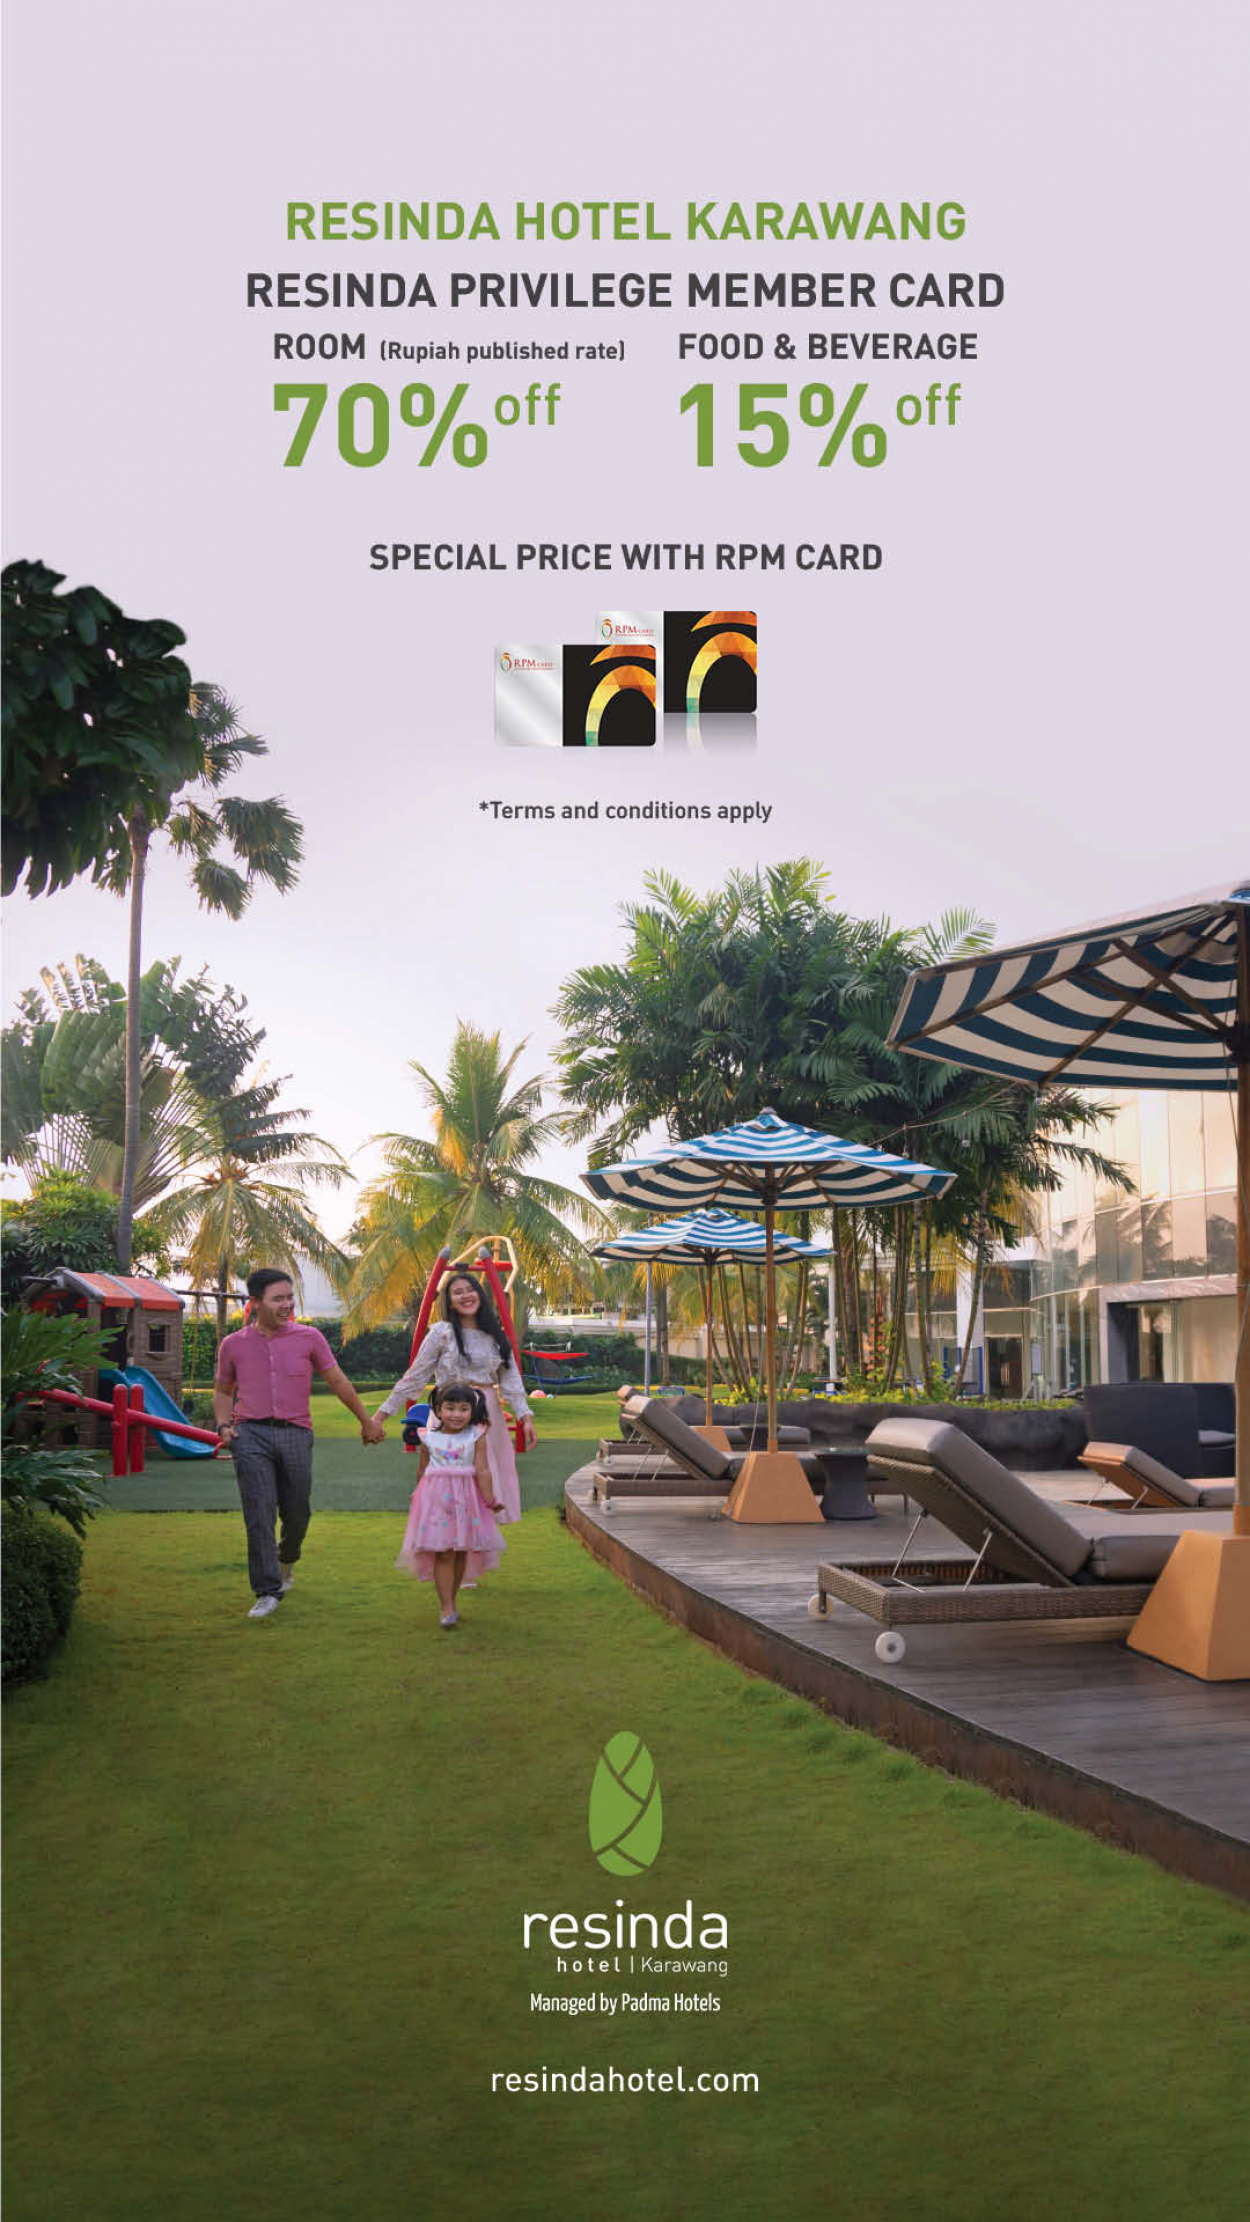 Resinda Hotel karawang - Januari Juni 2022 - RPM Card